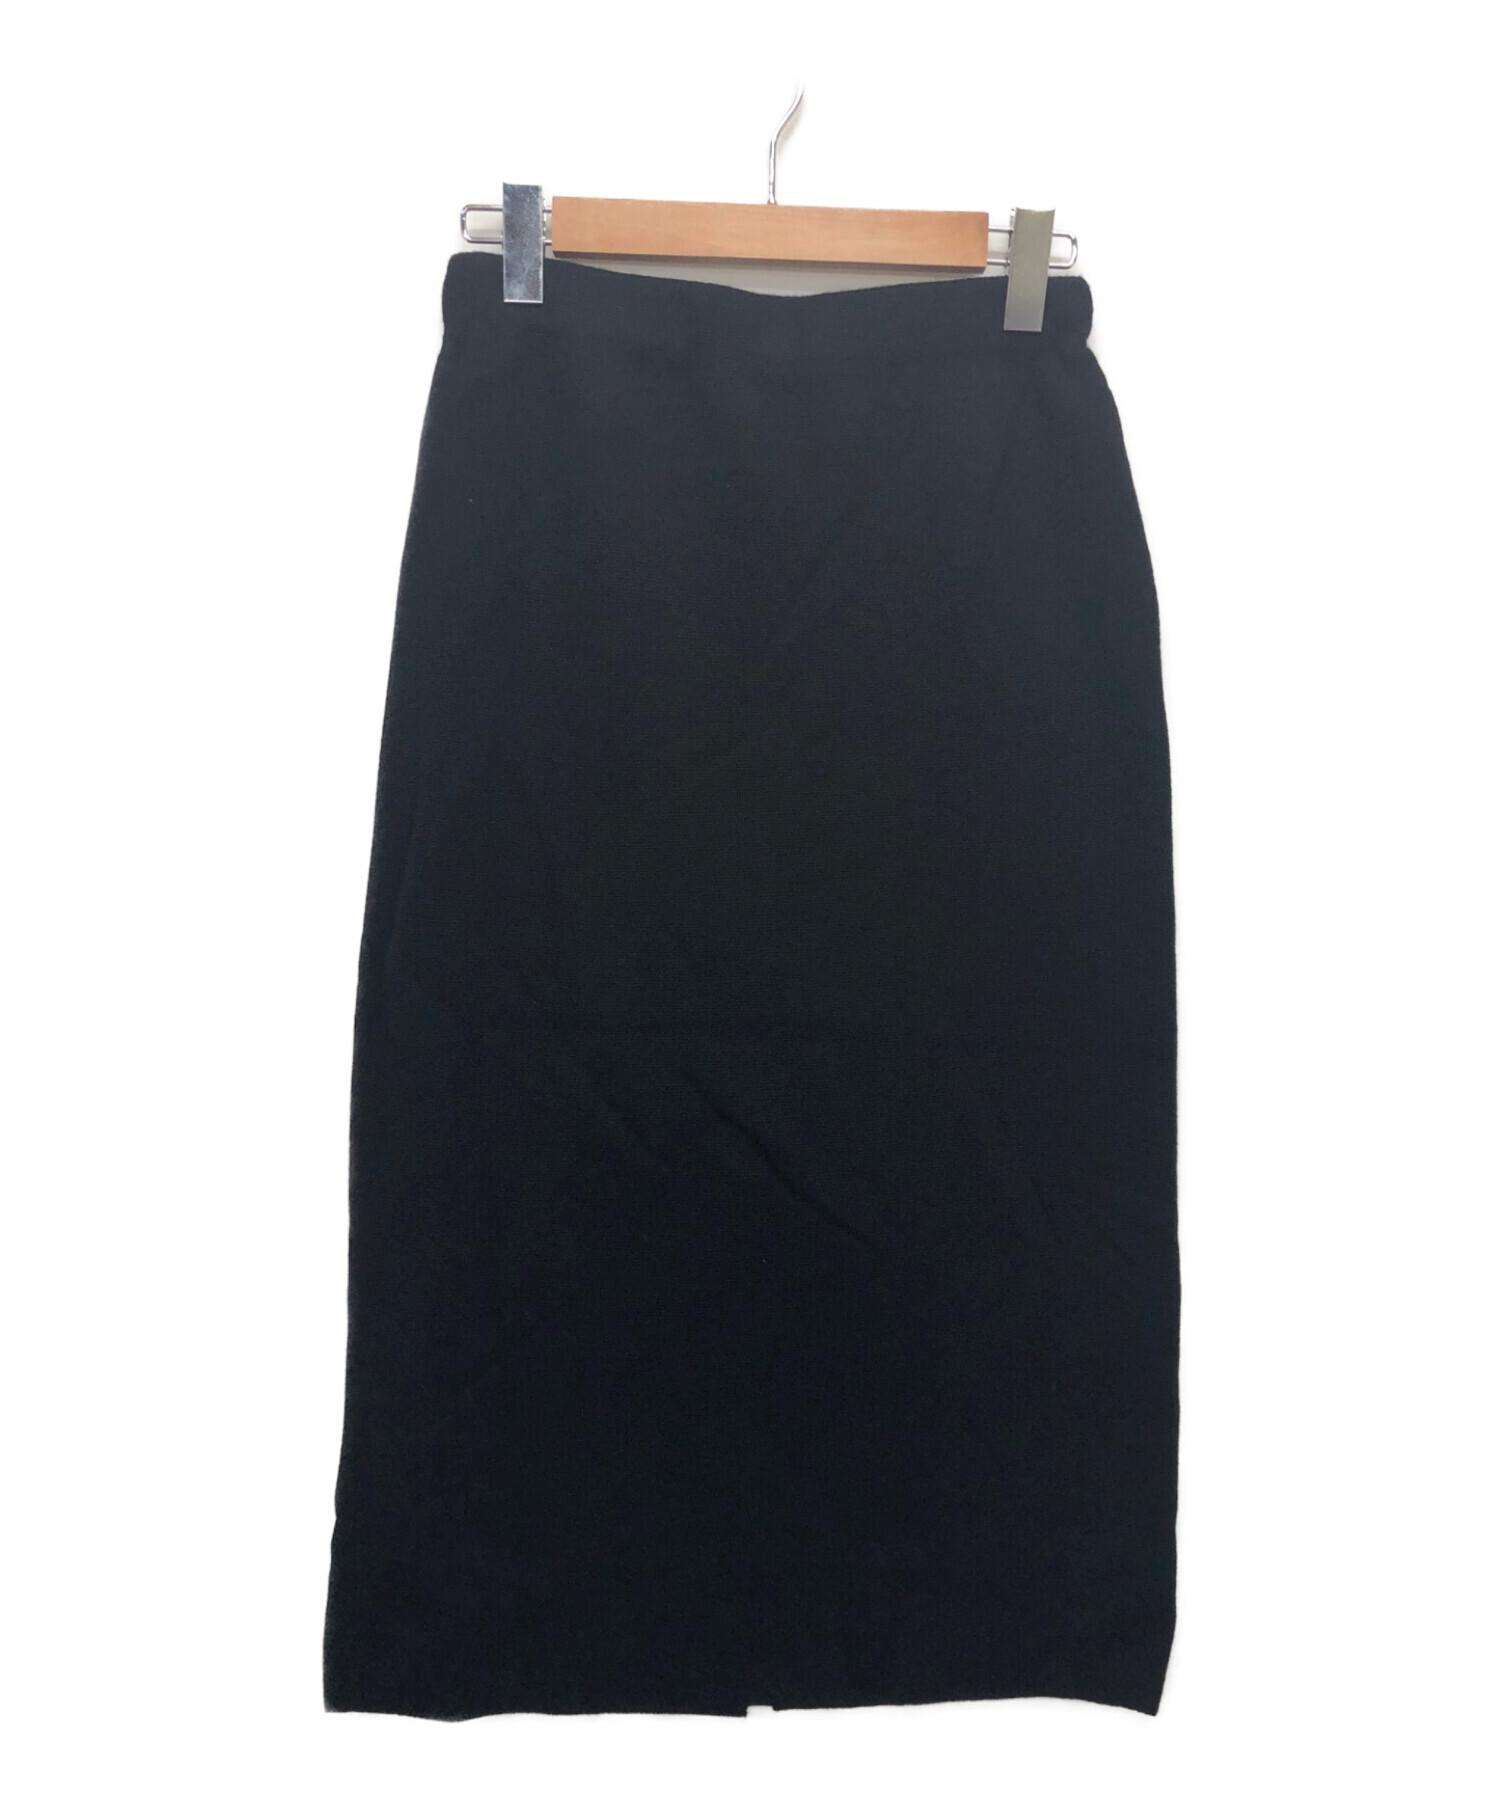 FRAMeWORK (フレームワーク) ミラノリブタイトスカート/スリットスカート/ニットスカート ブラック サイズ:38 未使用品